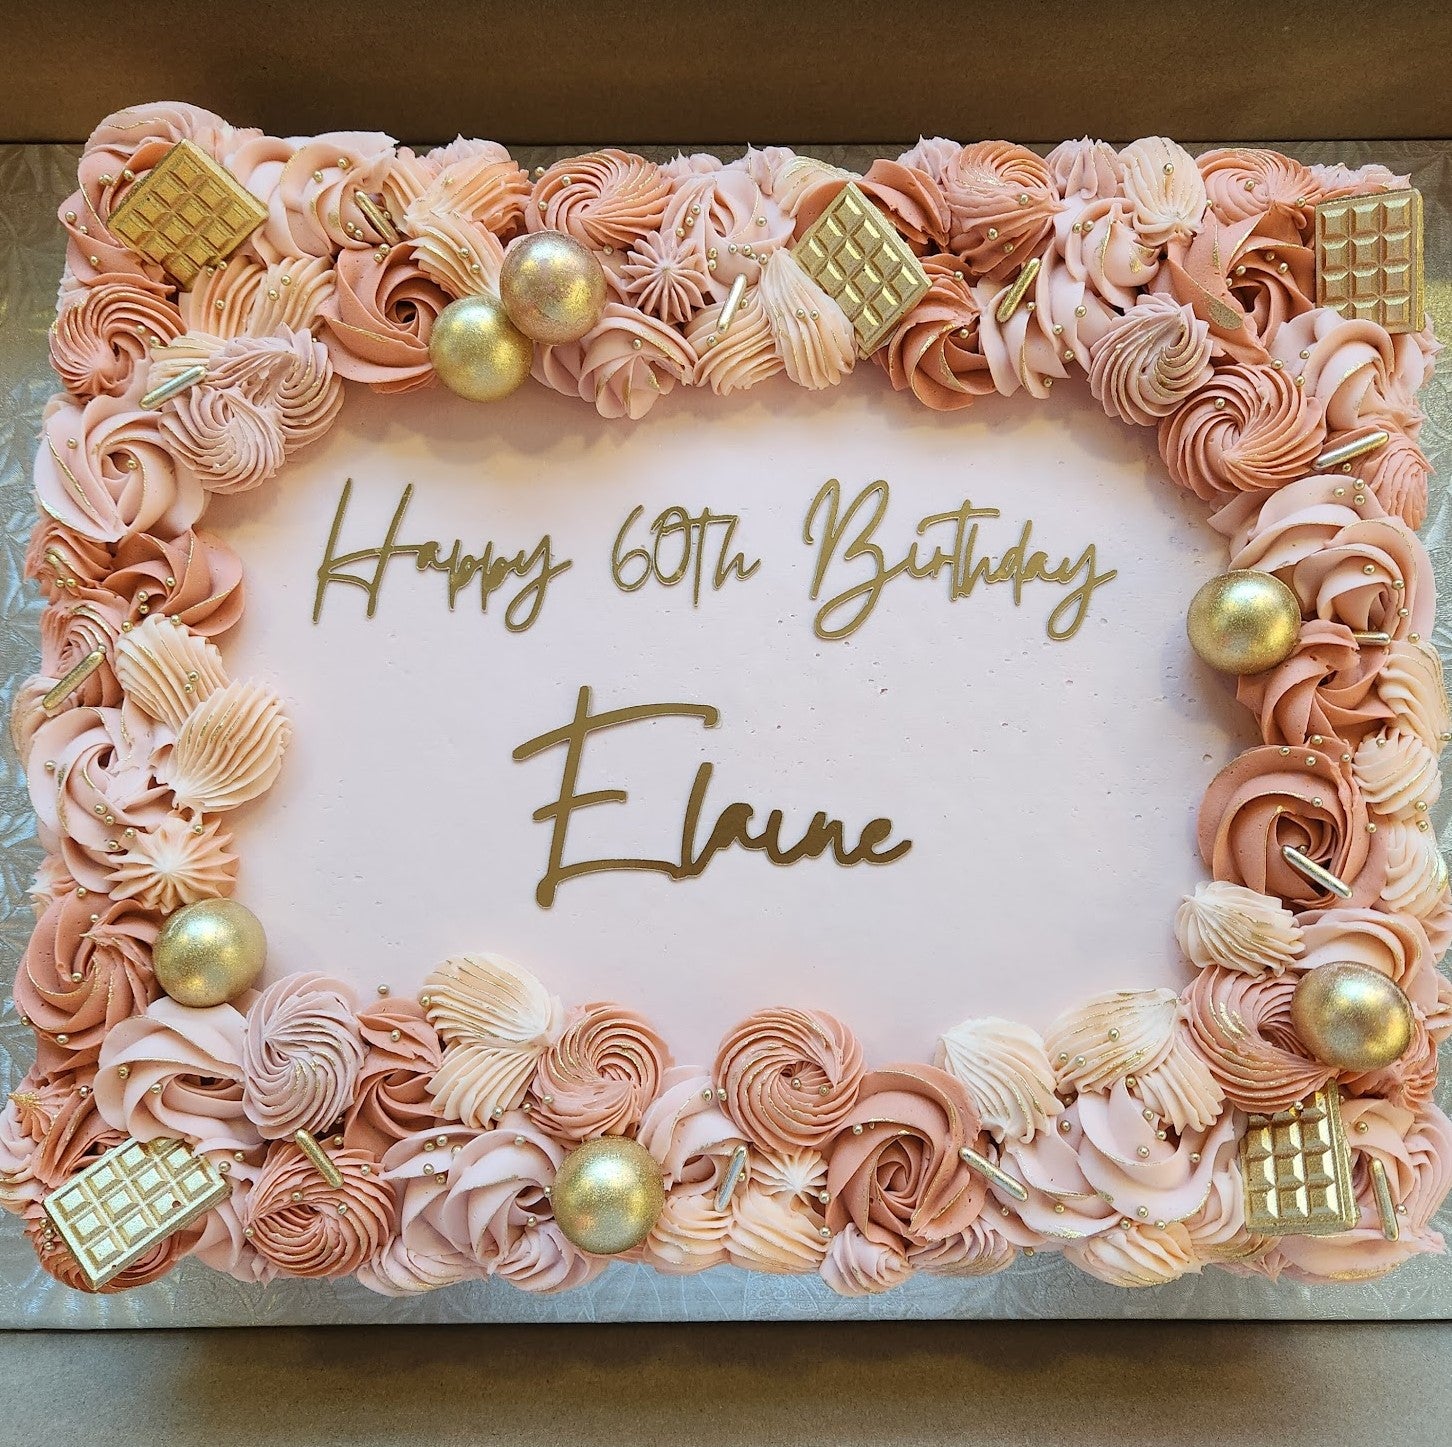 Pink and Gold Macaron Studded Naked Birthday Cake!